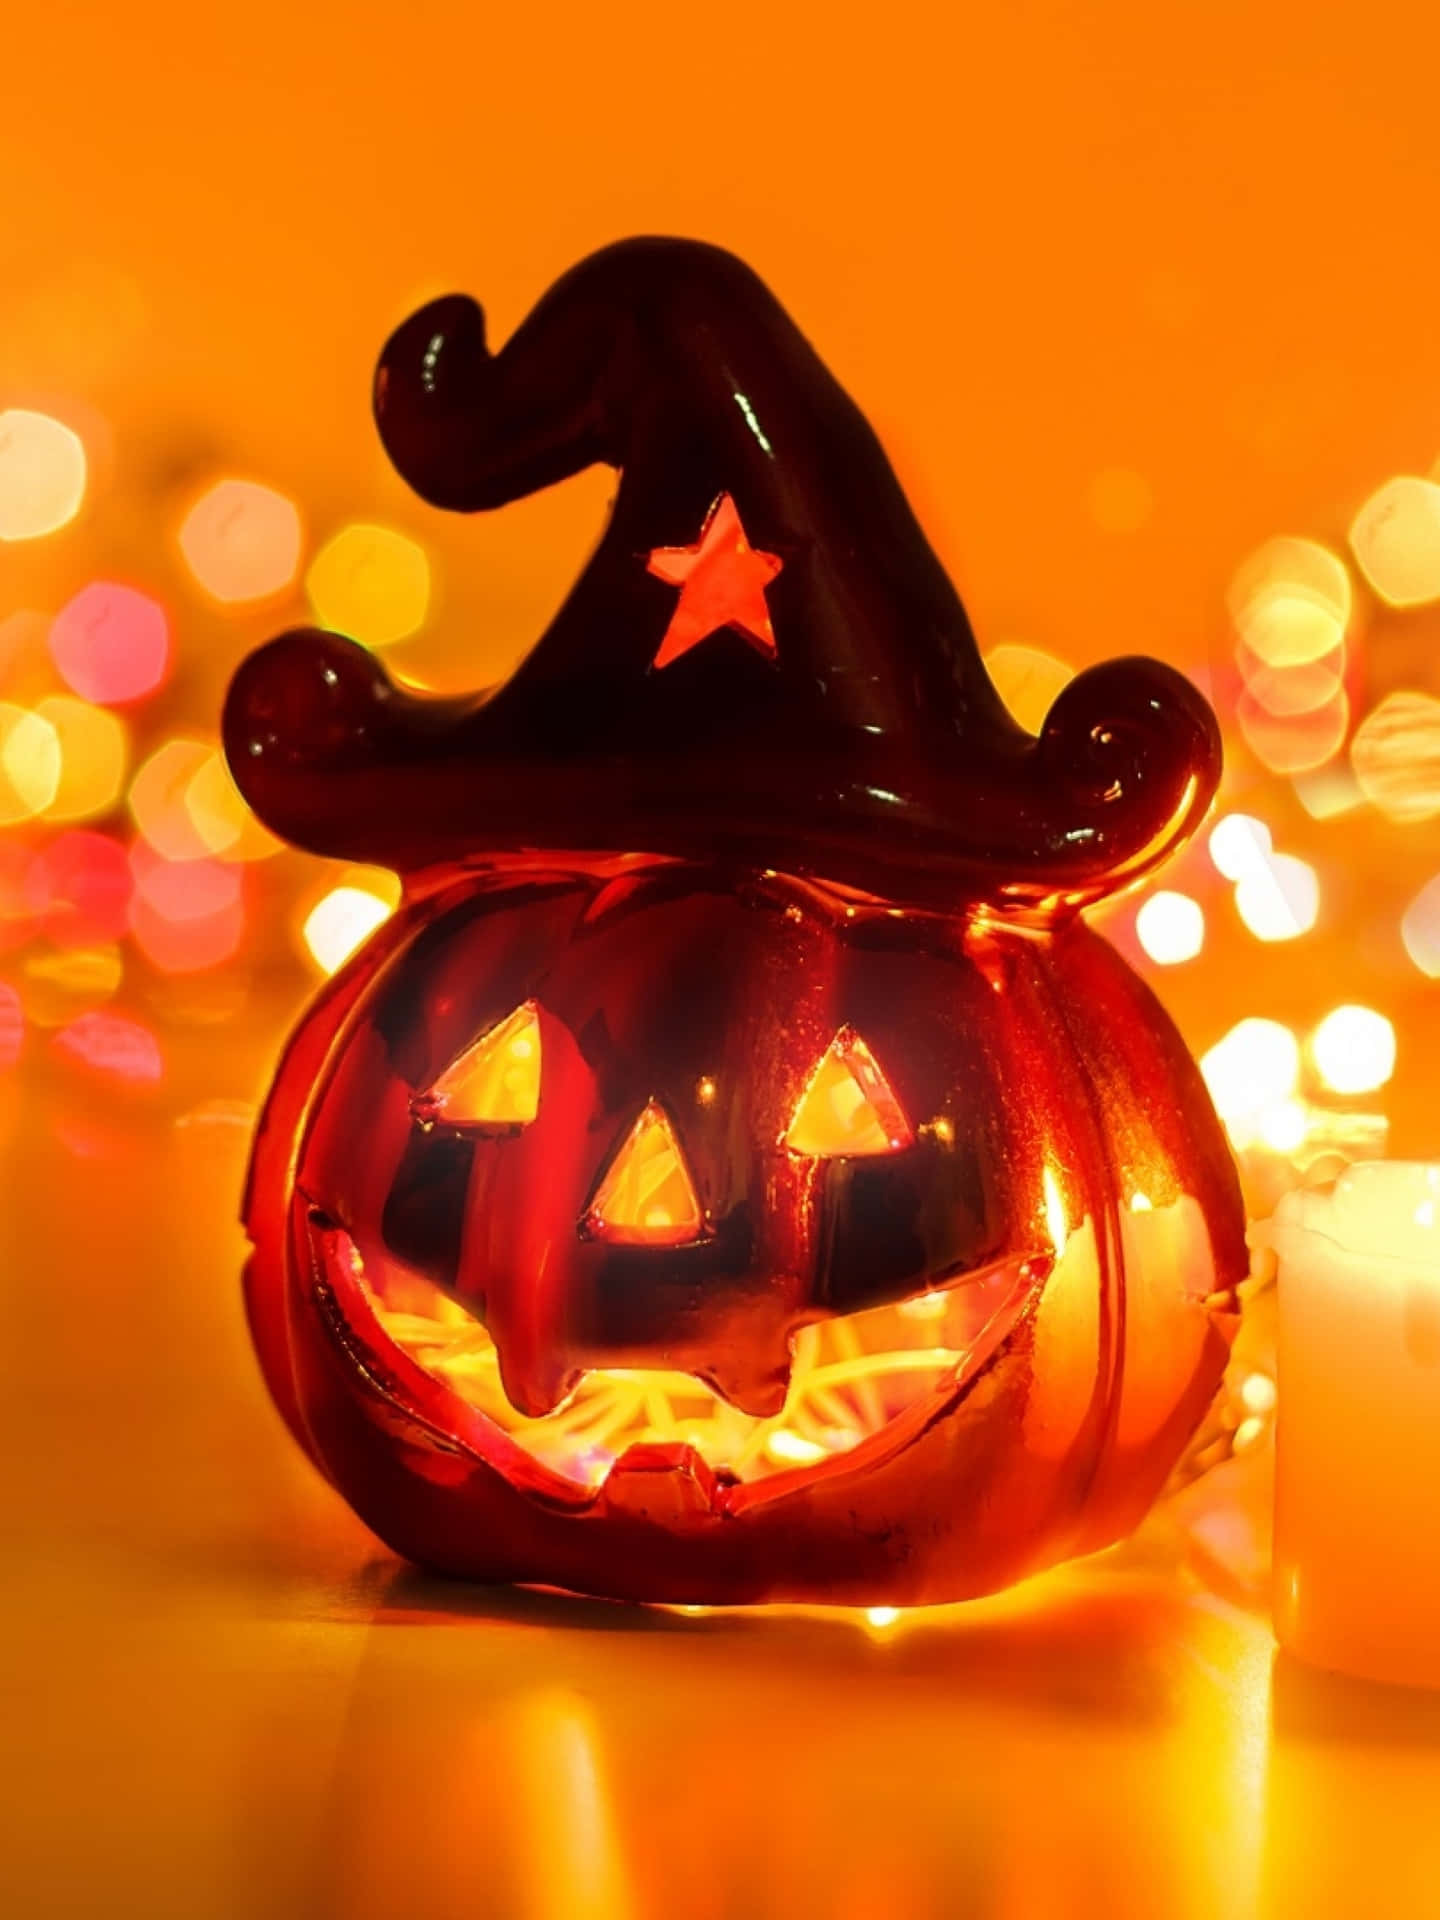 Make this Halloween Spooky yet Fun